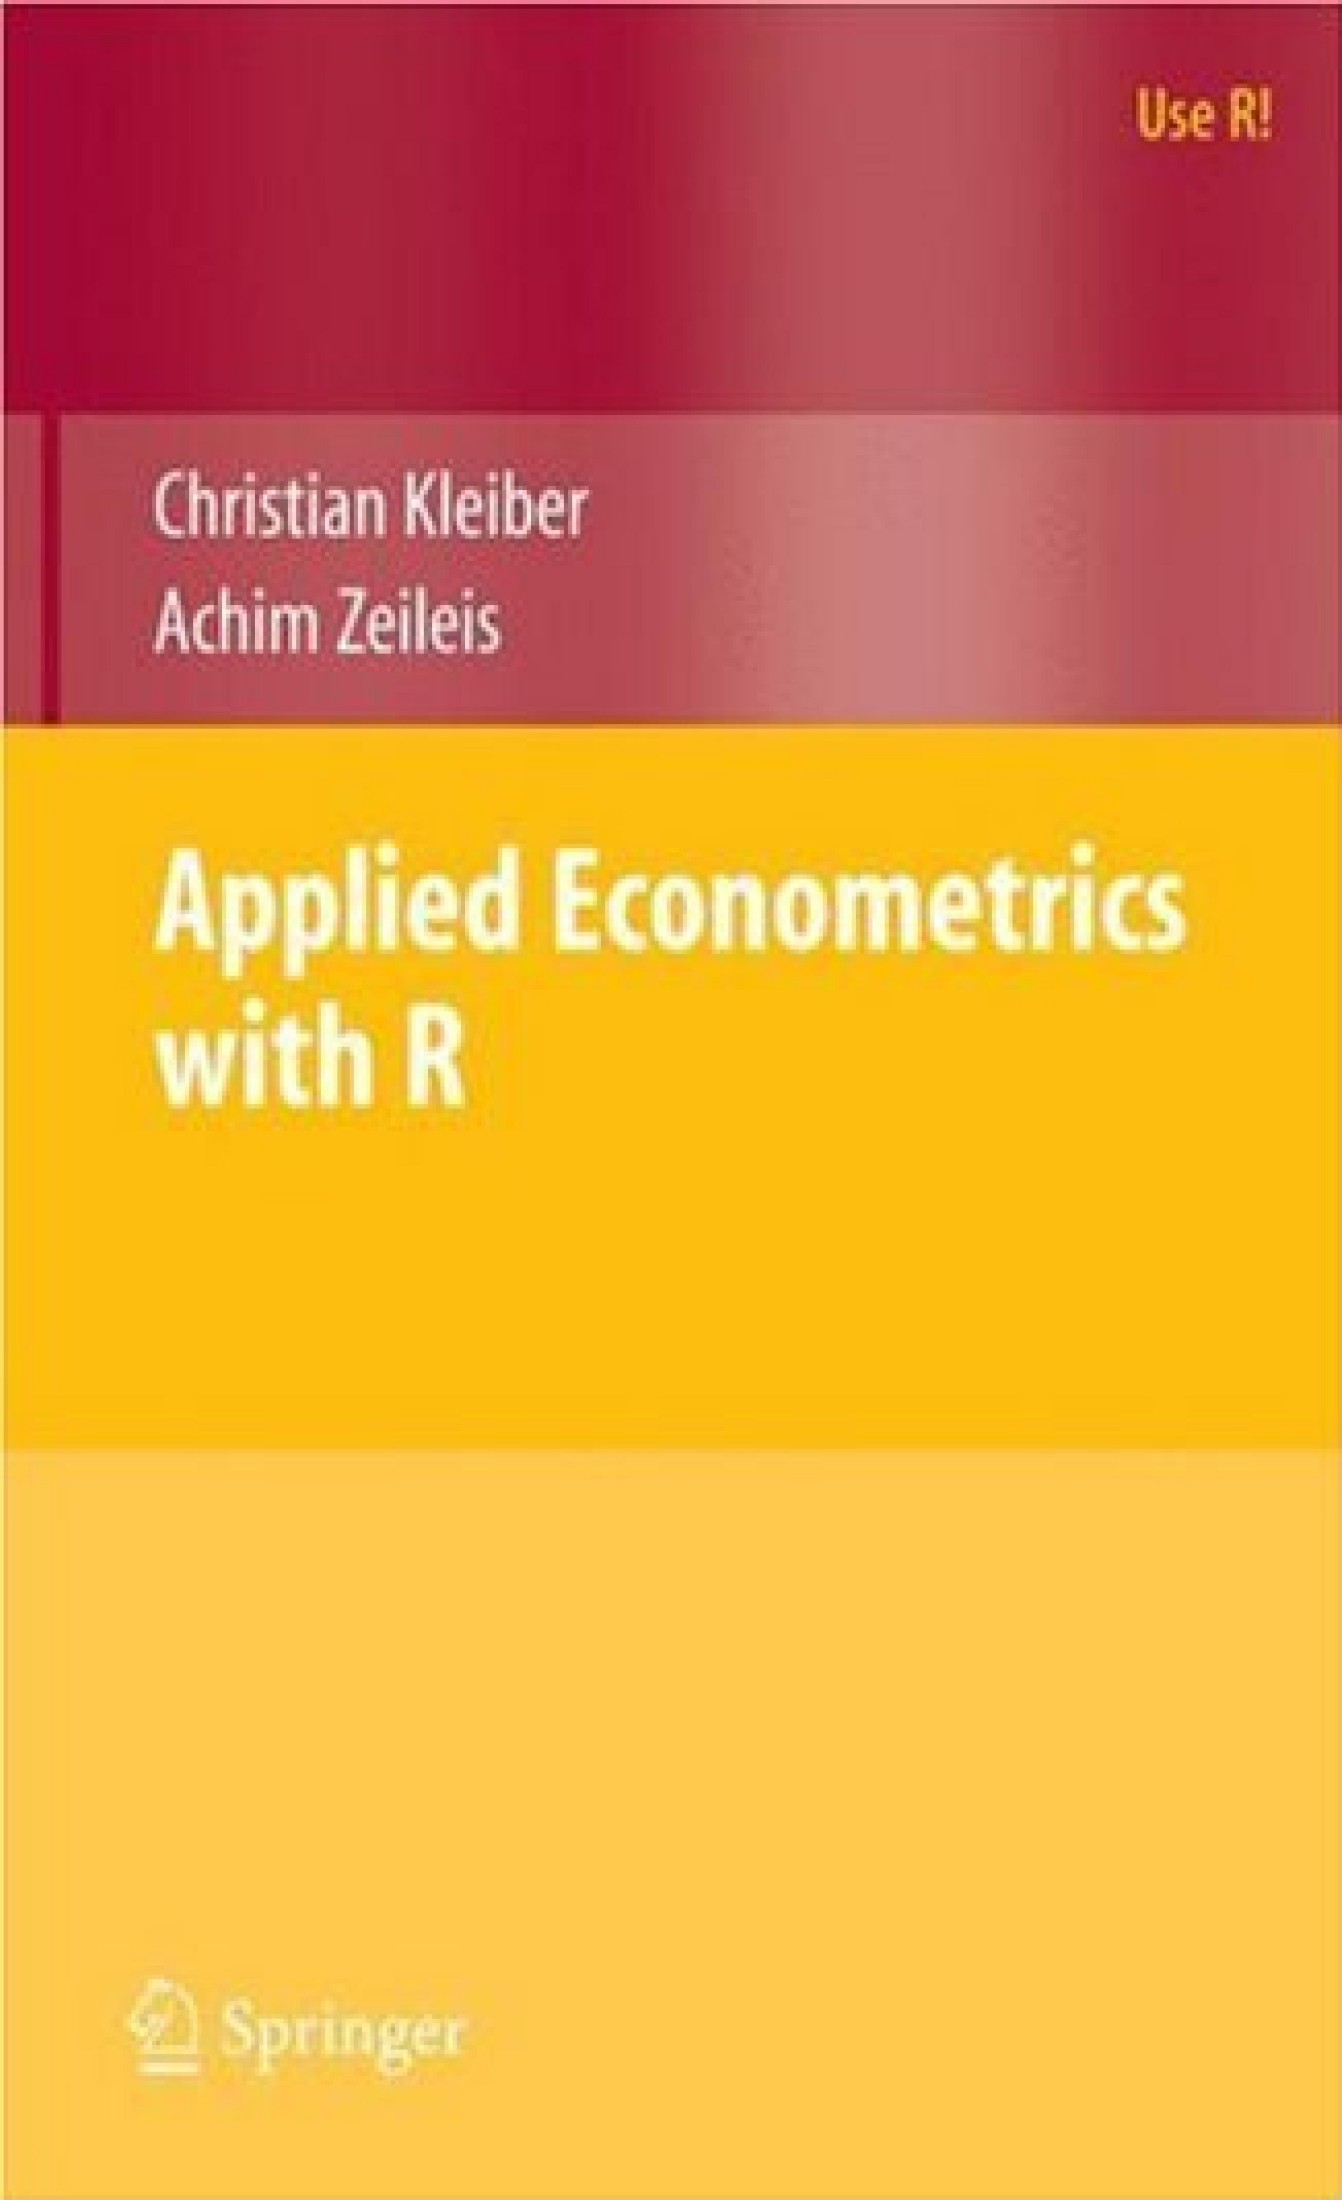 Applied Econometrics with R (Use R)